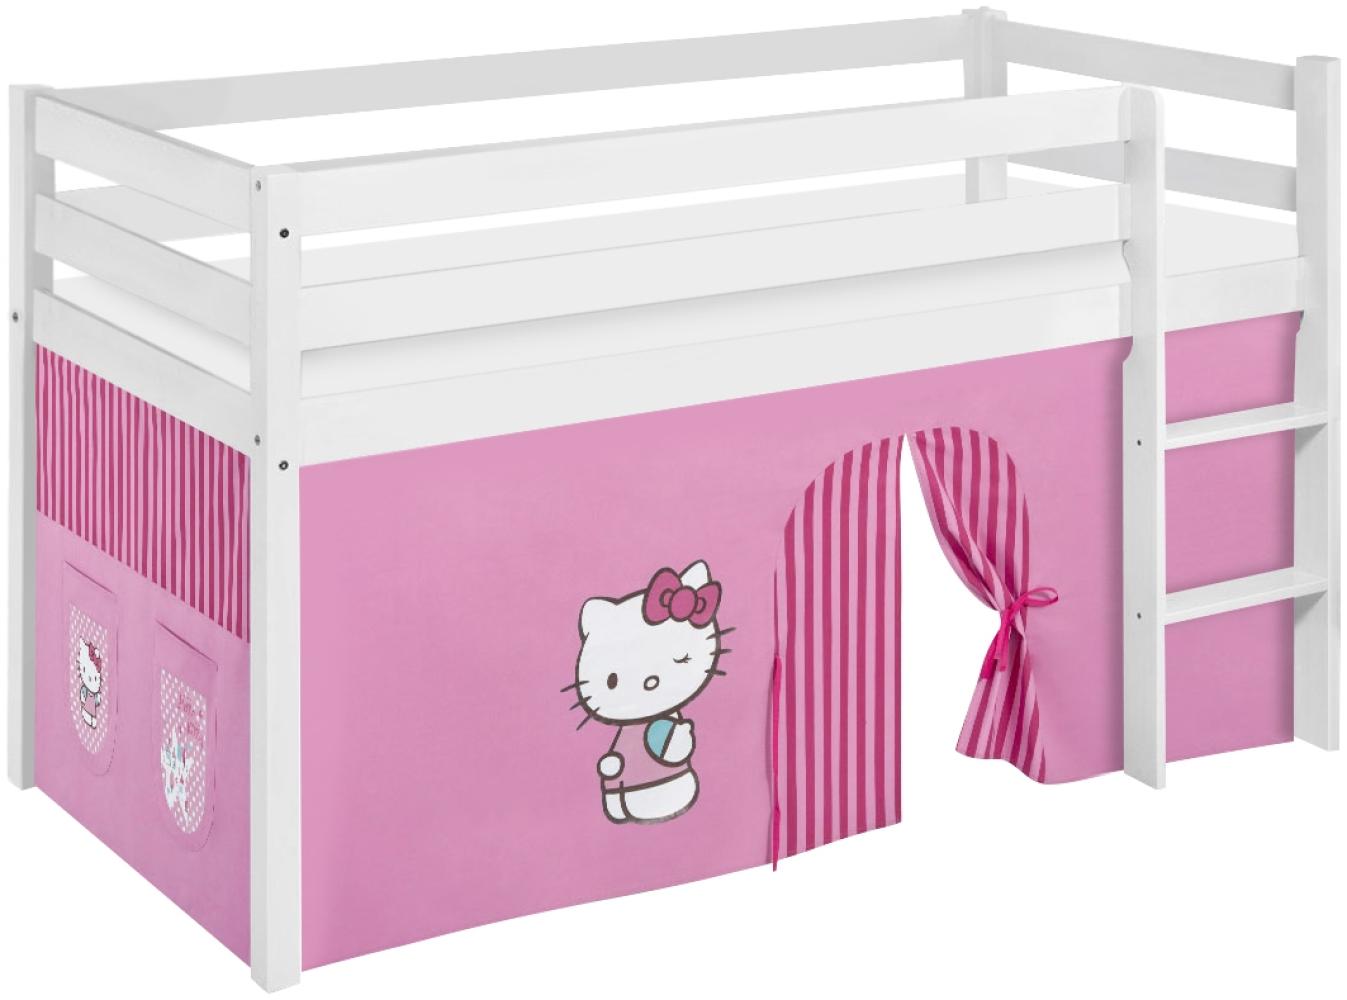 Lilokids 'Jelle' Spielbett 90 x 190 cm, Hello Kitty Rosa, Kiefer massiv, mit Vorhang Bild 1